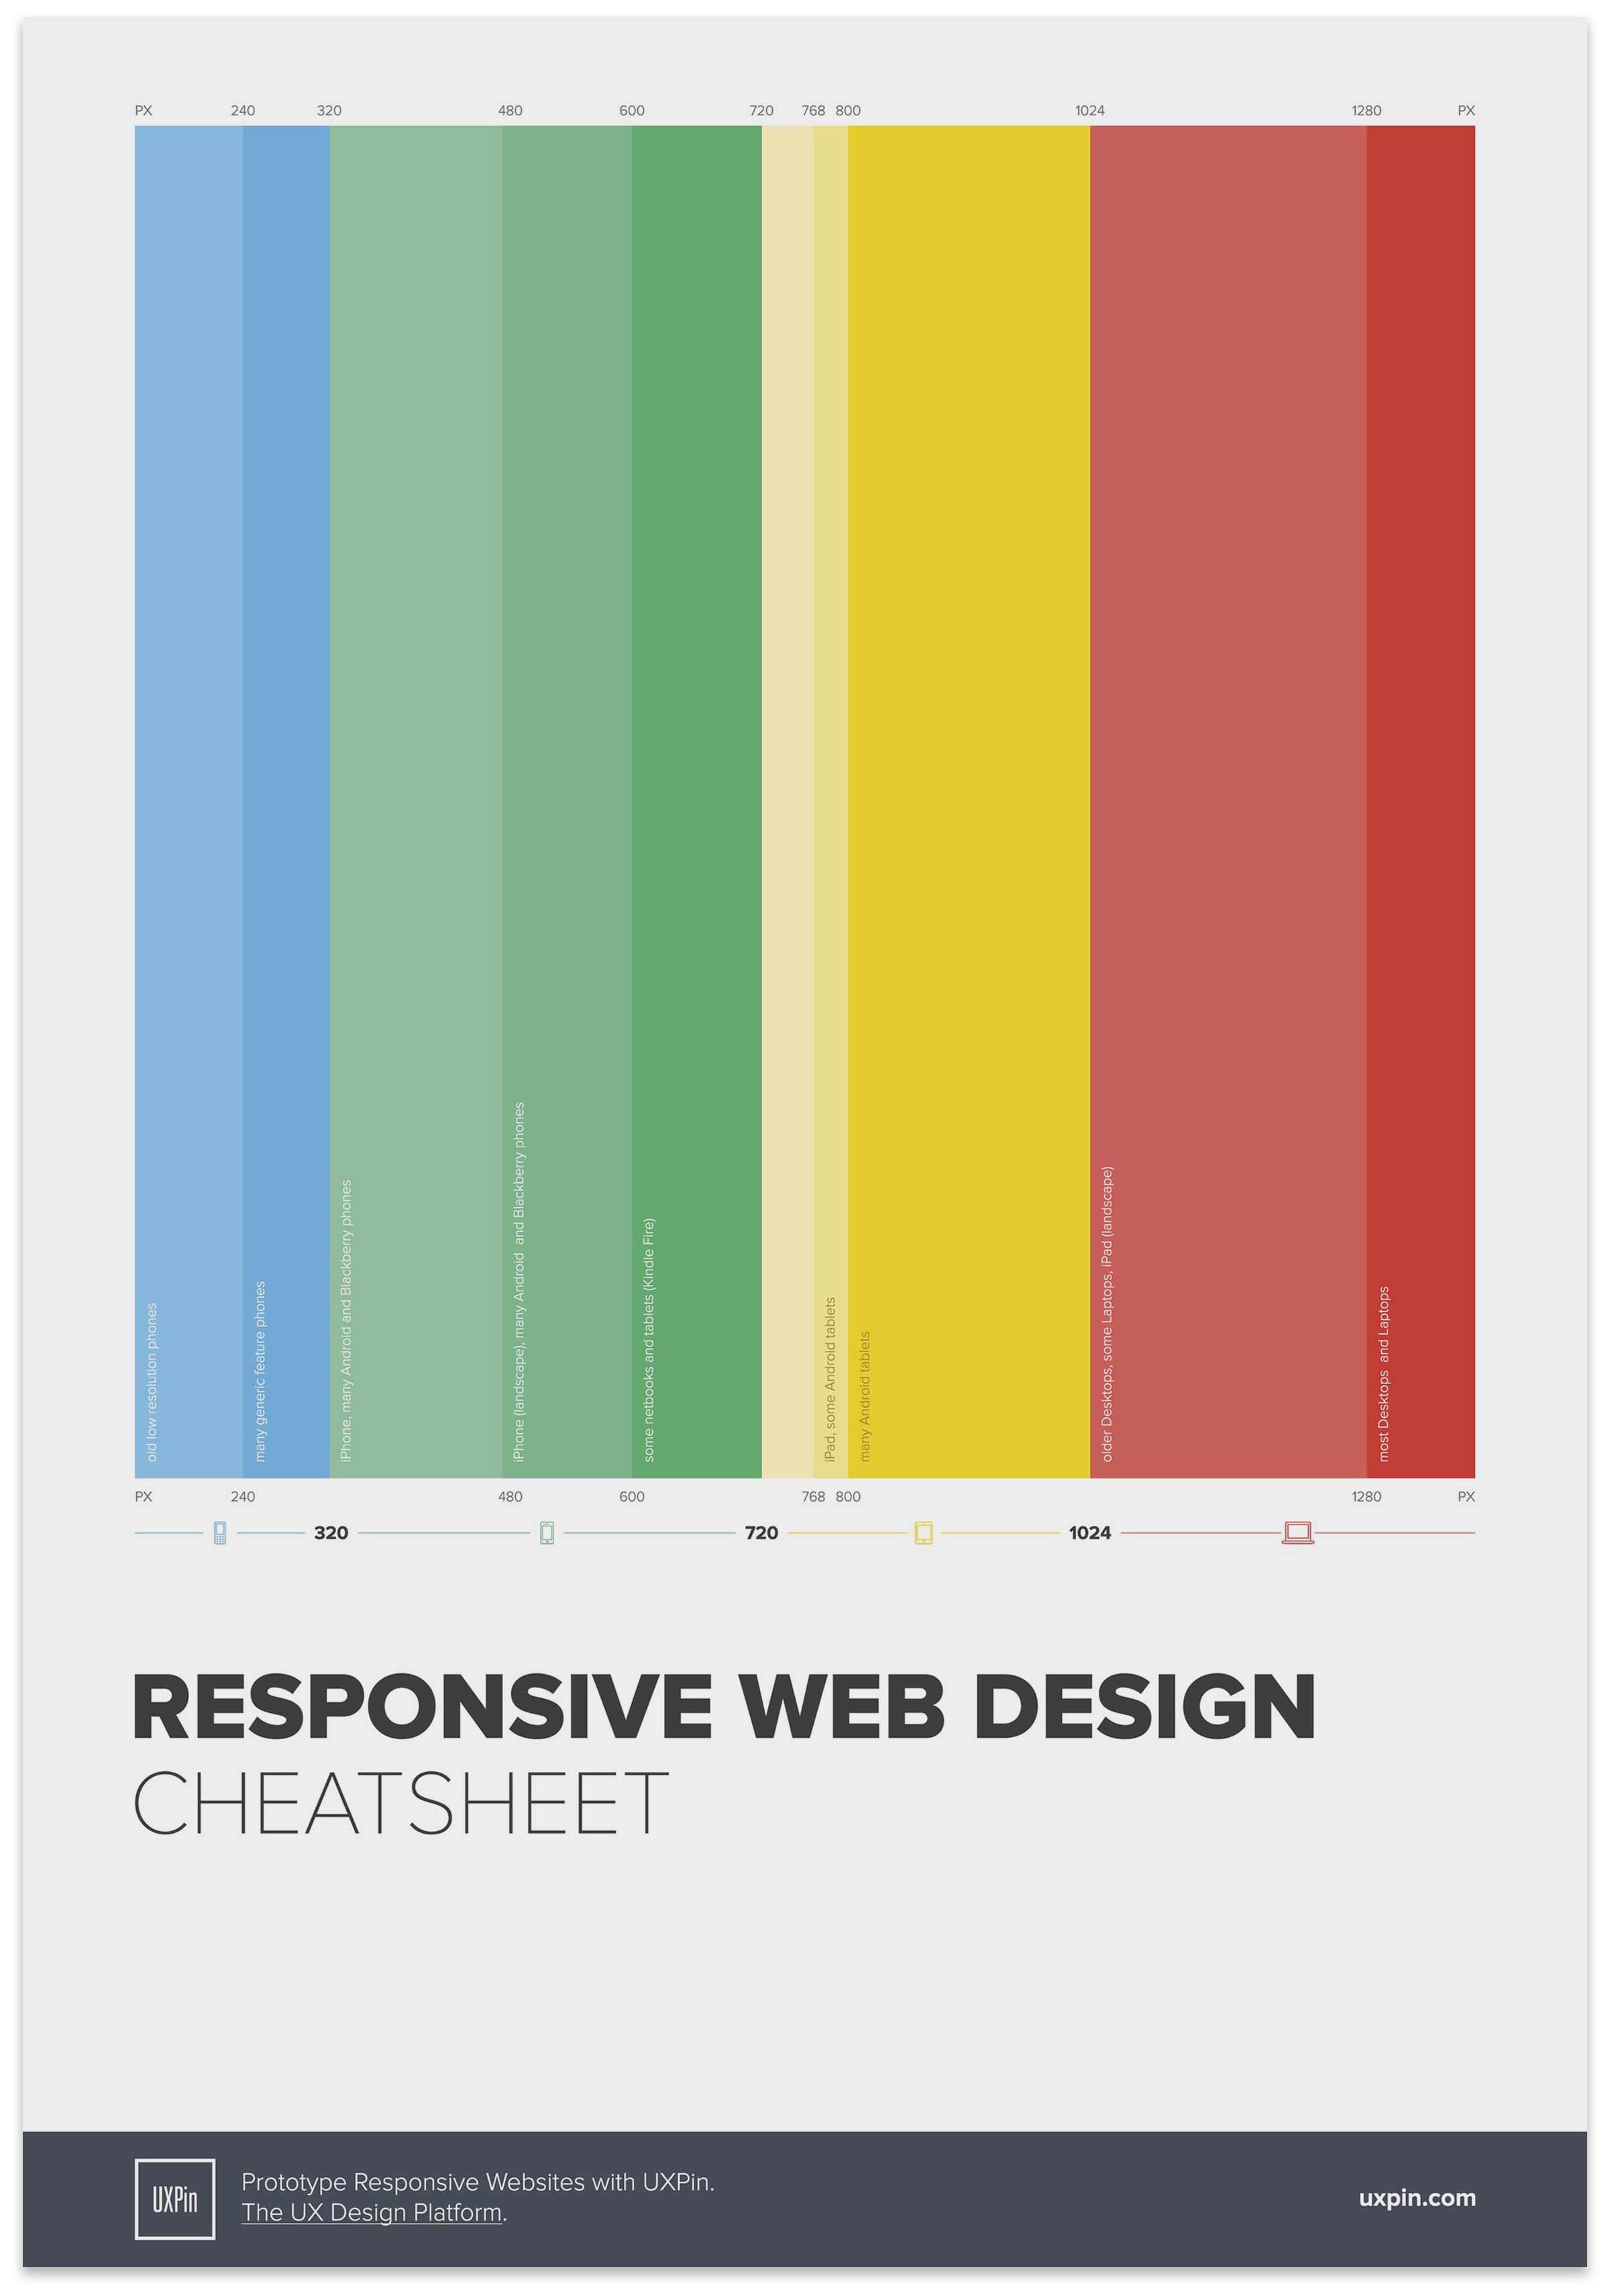 Responsive web design cheat sheet by Ben Gremillion